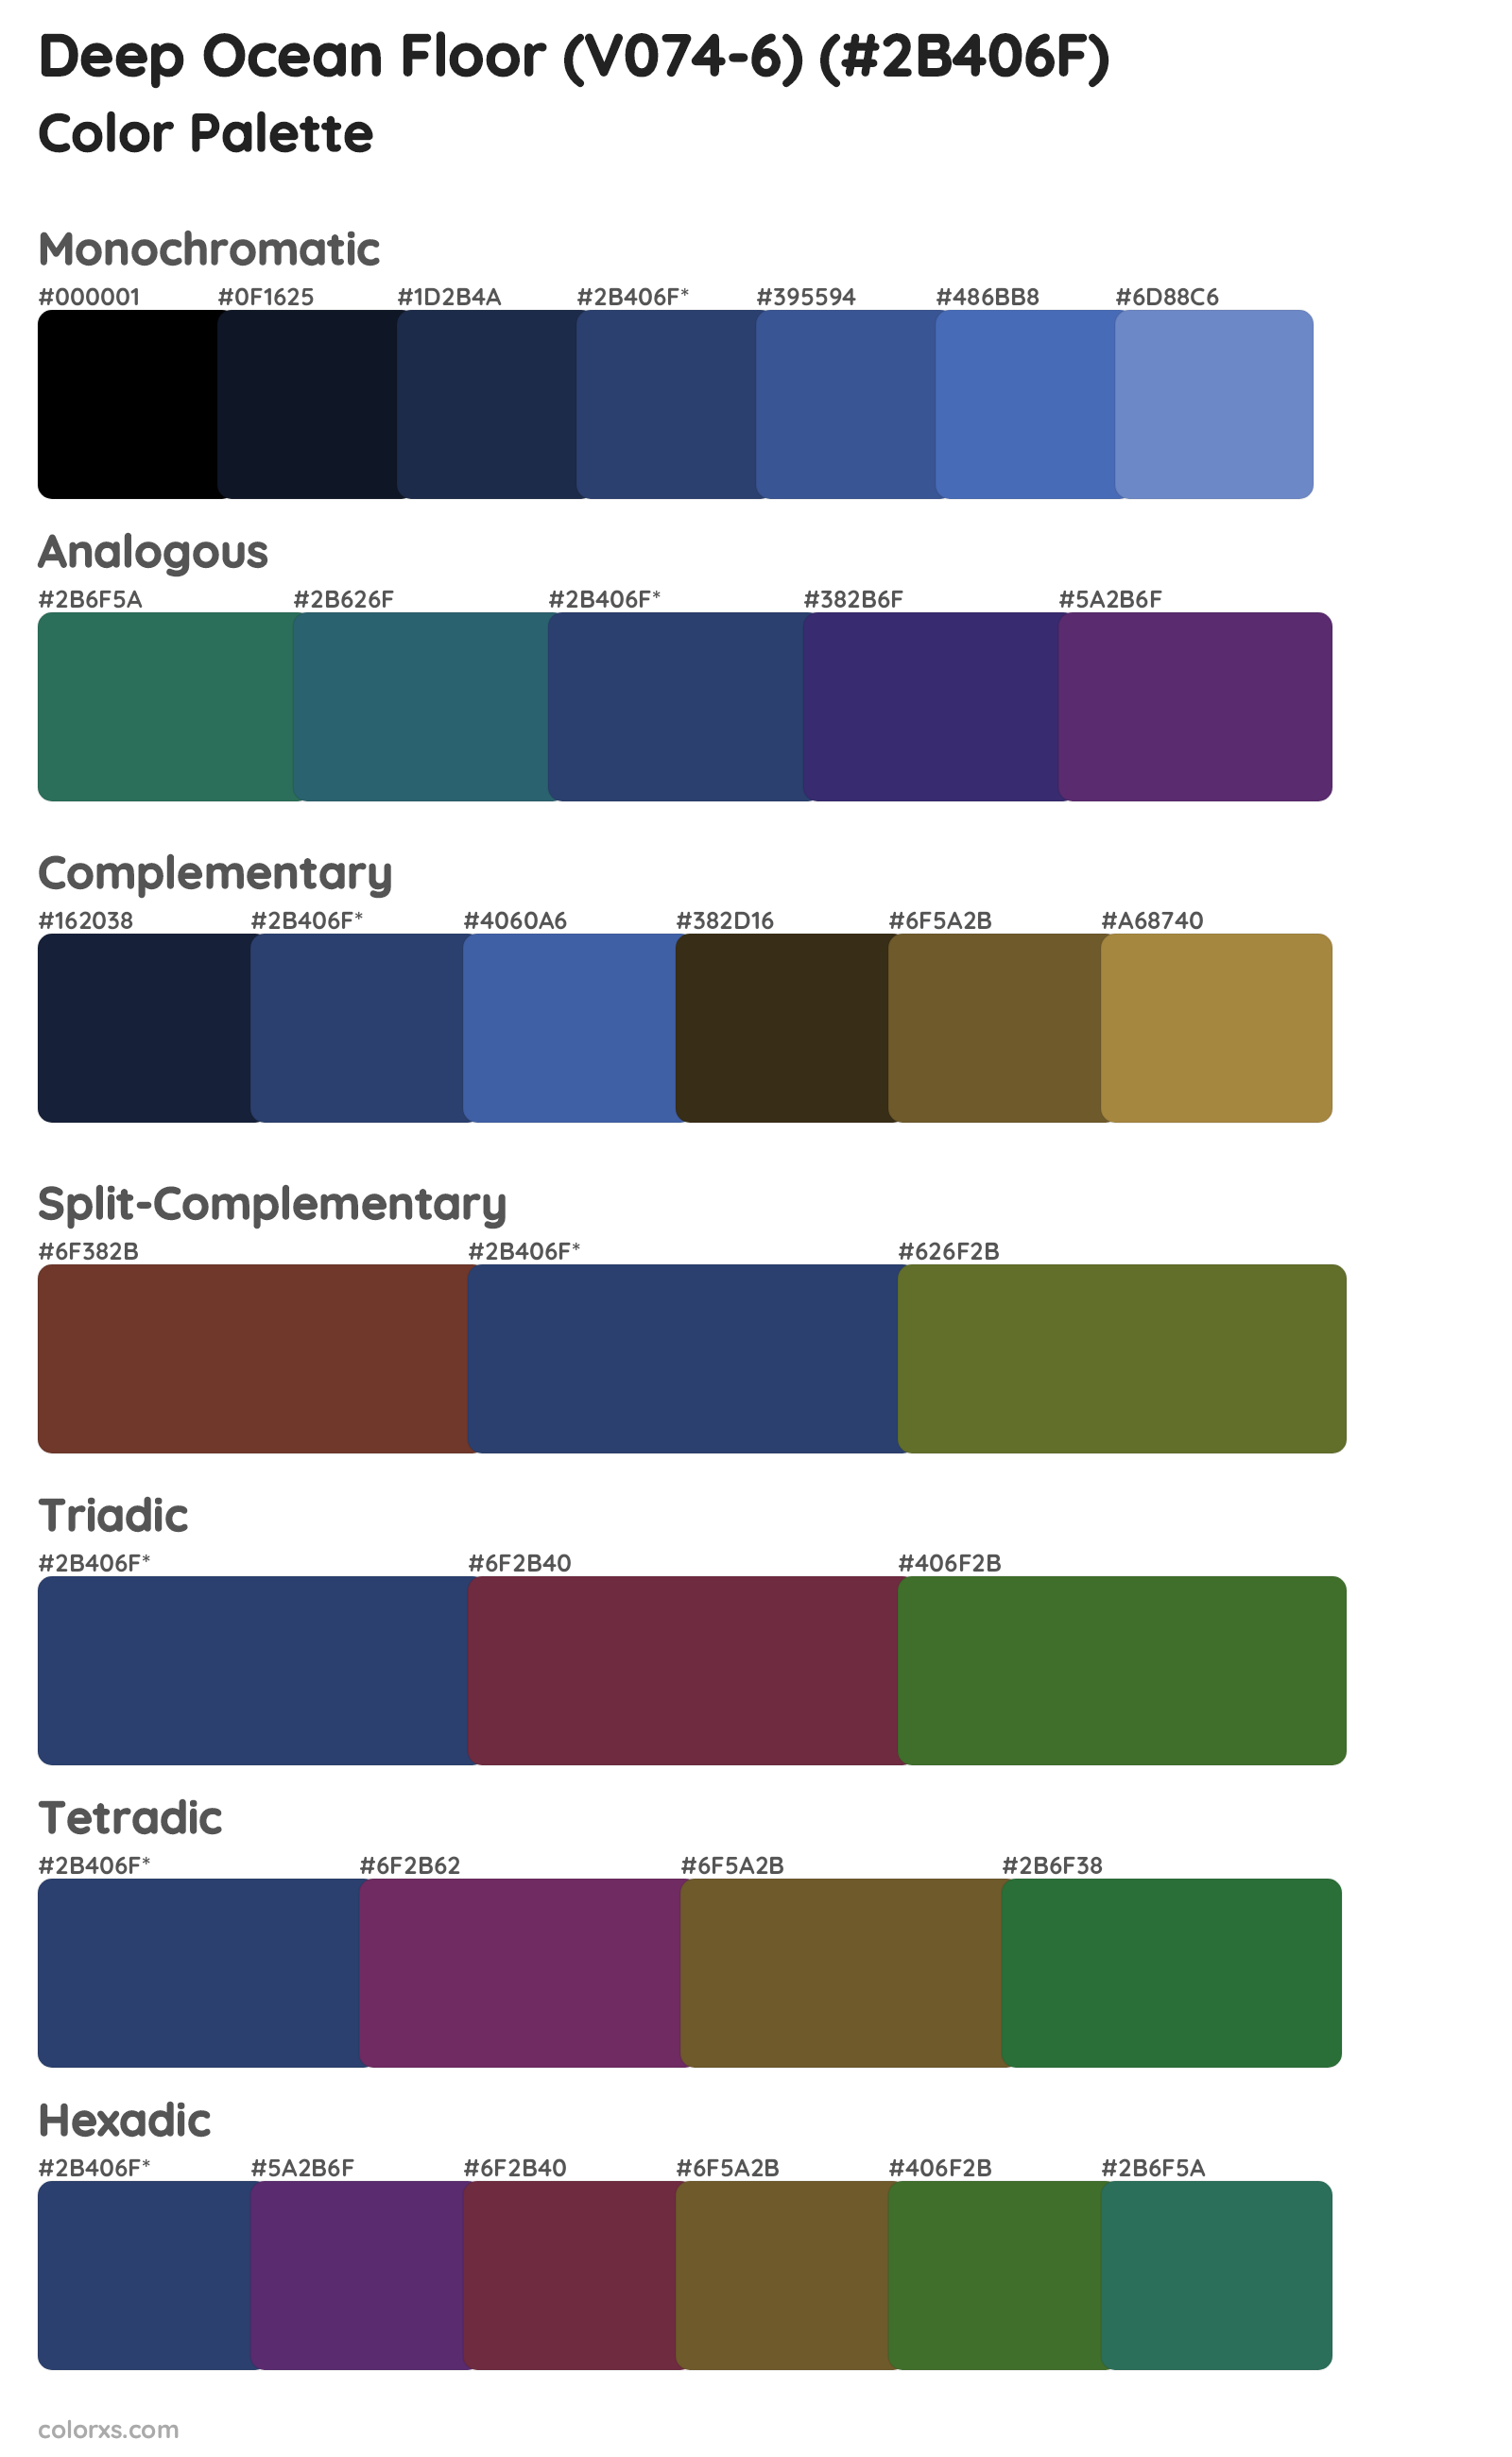 Deep Ocean Floor (V074-6) Color Scheme Palettes